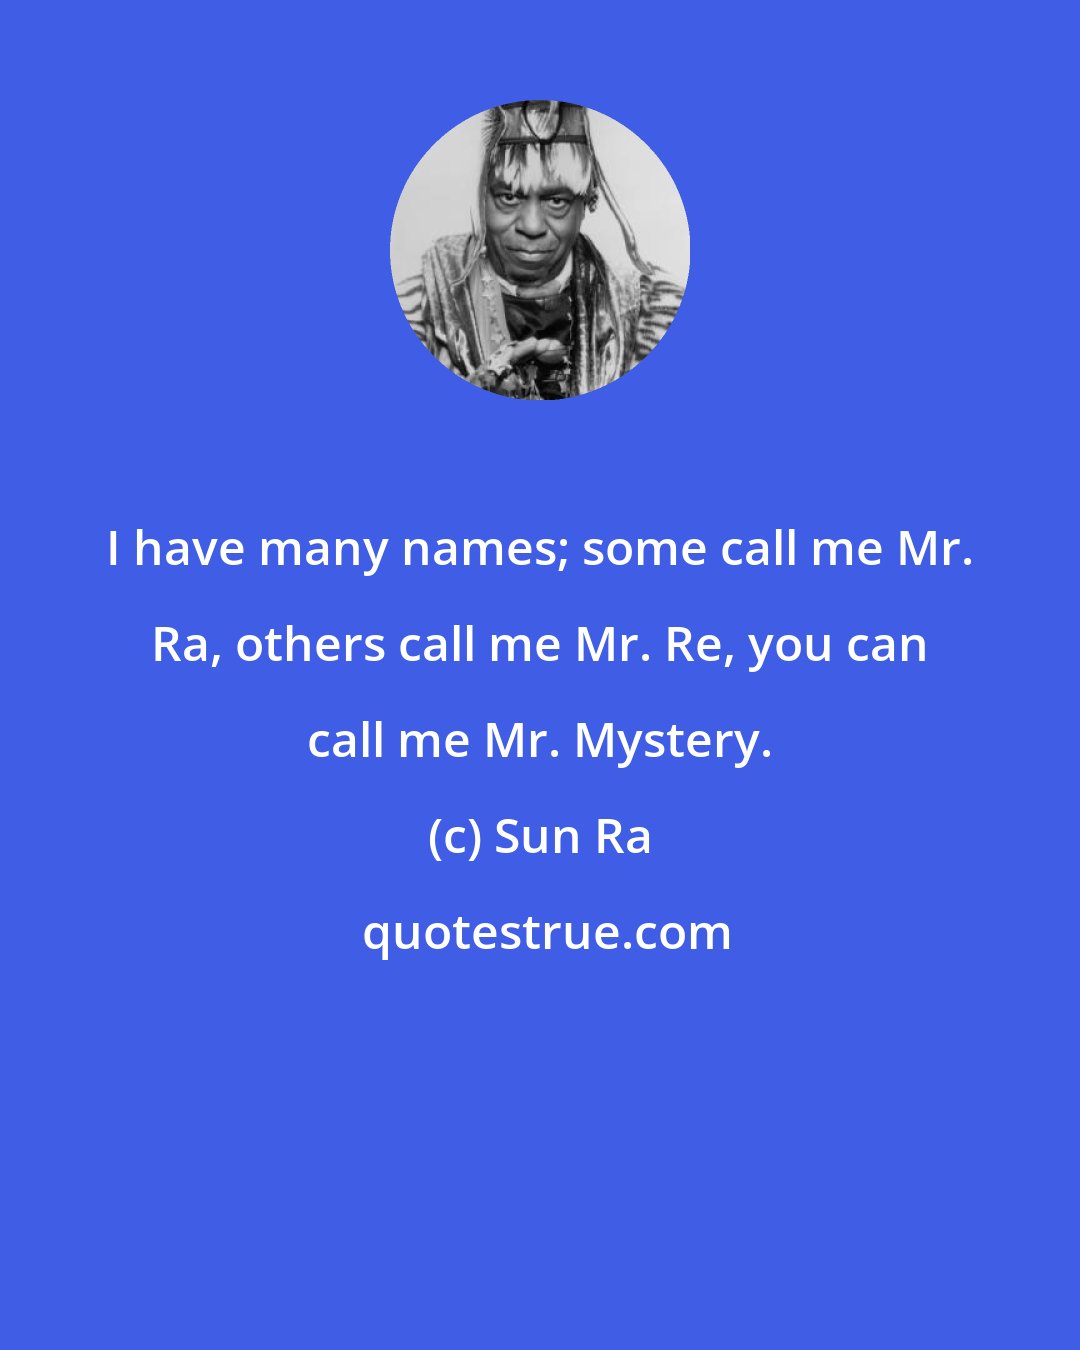 Sun Ra: I have many names; some call me Mr. Ra, others call me Mr. Re, you can call me Mr. Mystery.